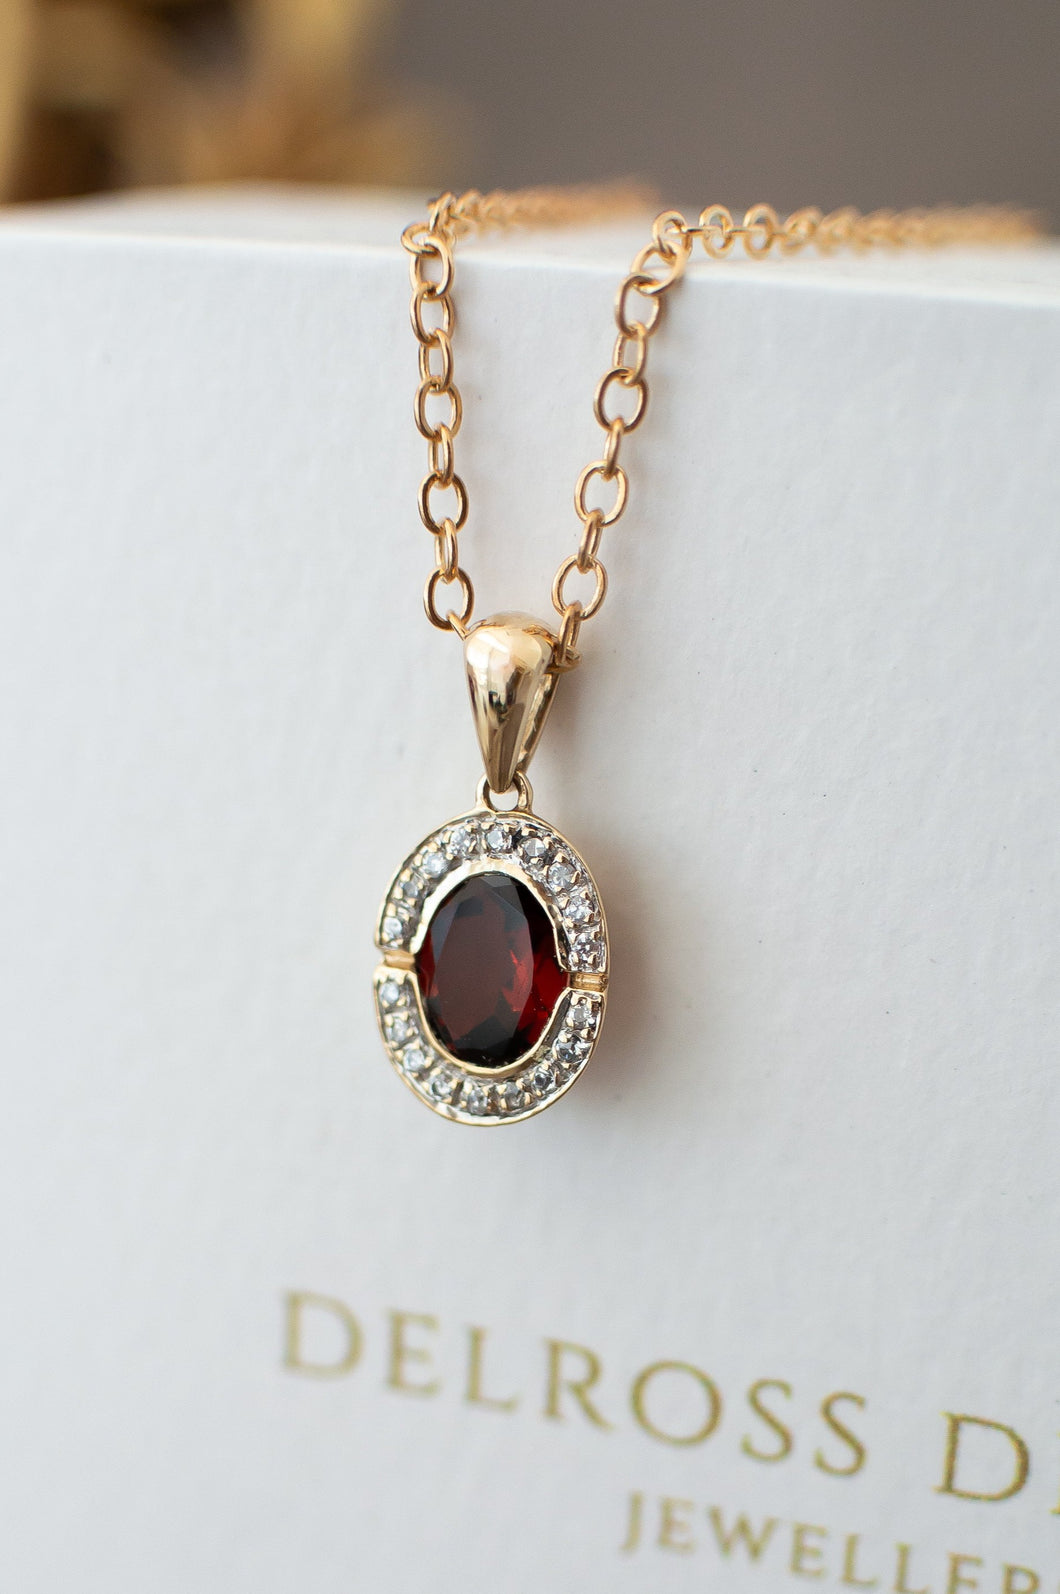 9ct Gold Pyrope Garnet & Diamond Pendant,  Delross Design Jeweller, Brisbane Jeweller, Chermside Jeweller, Custom Jewellery